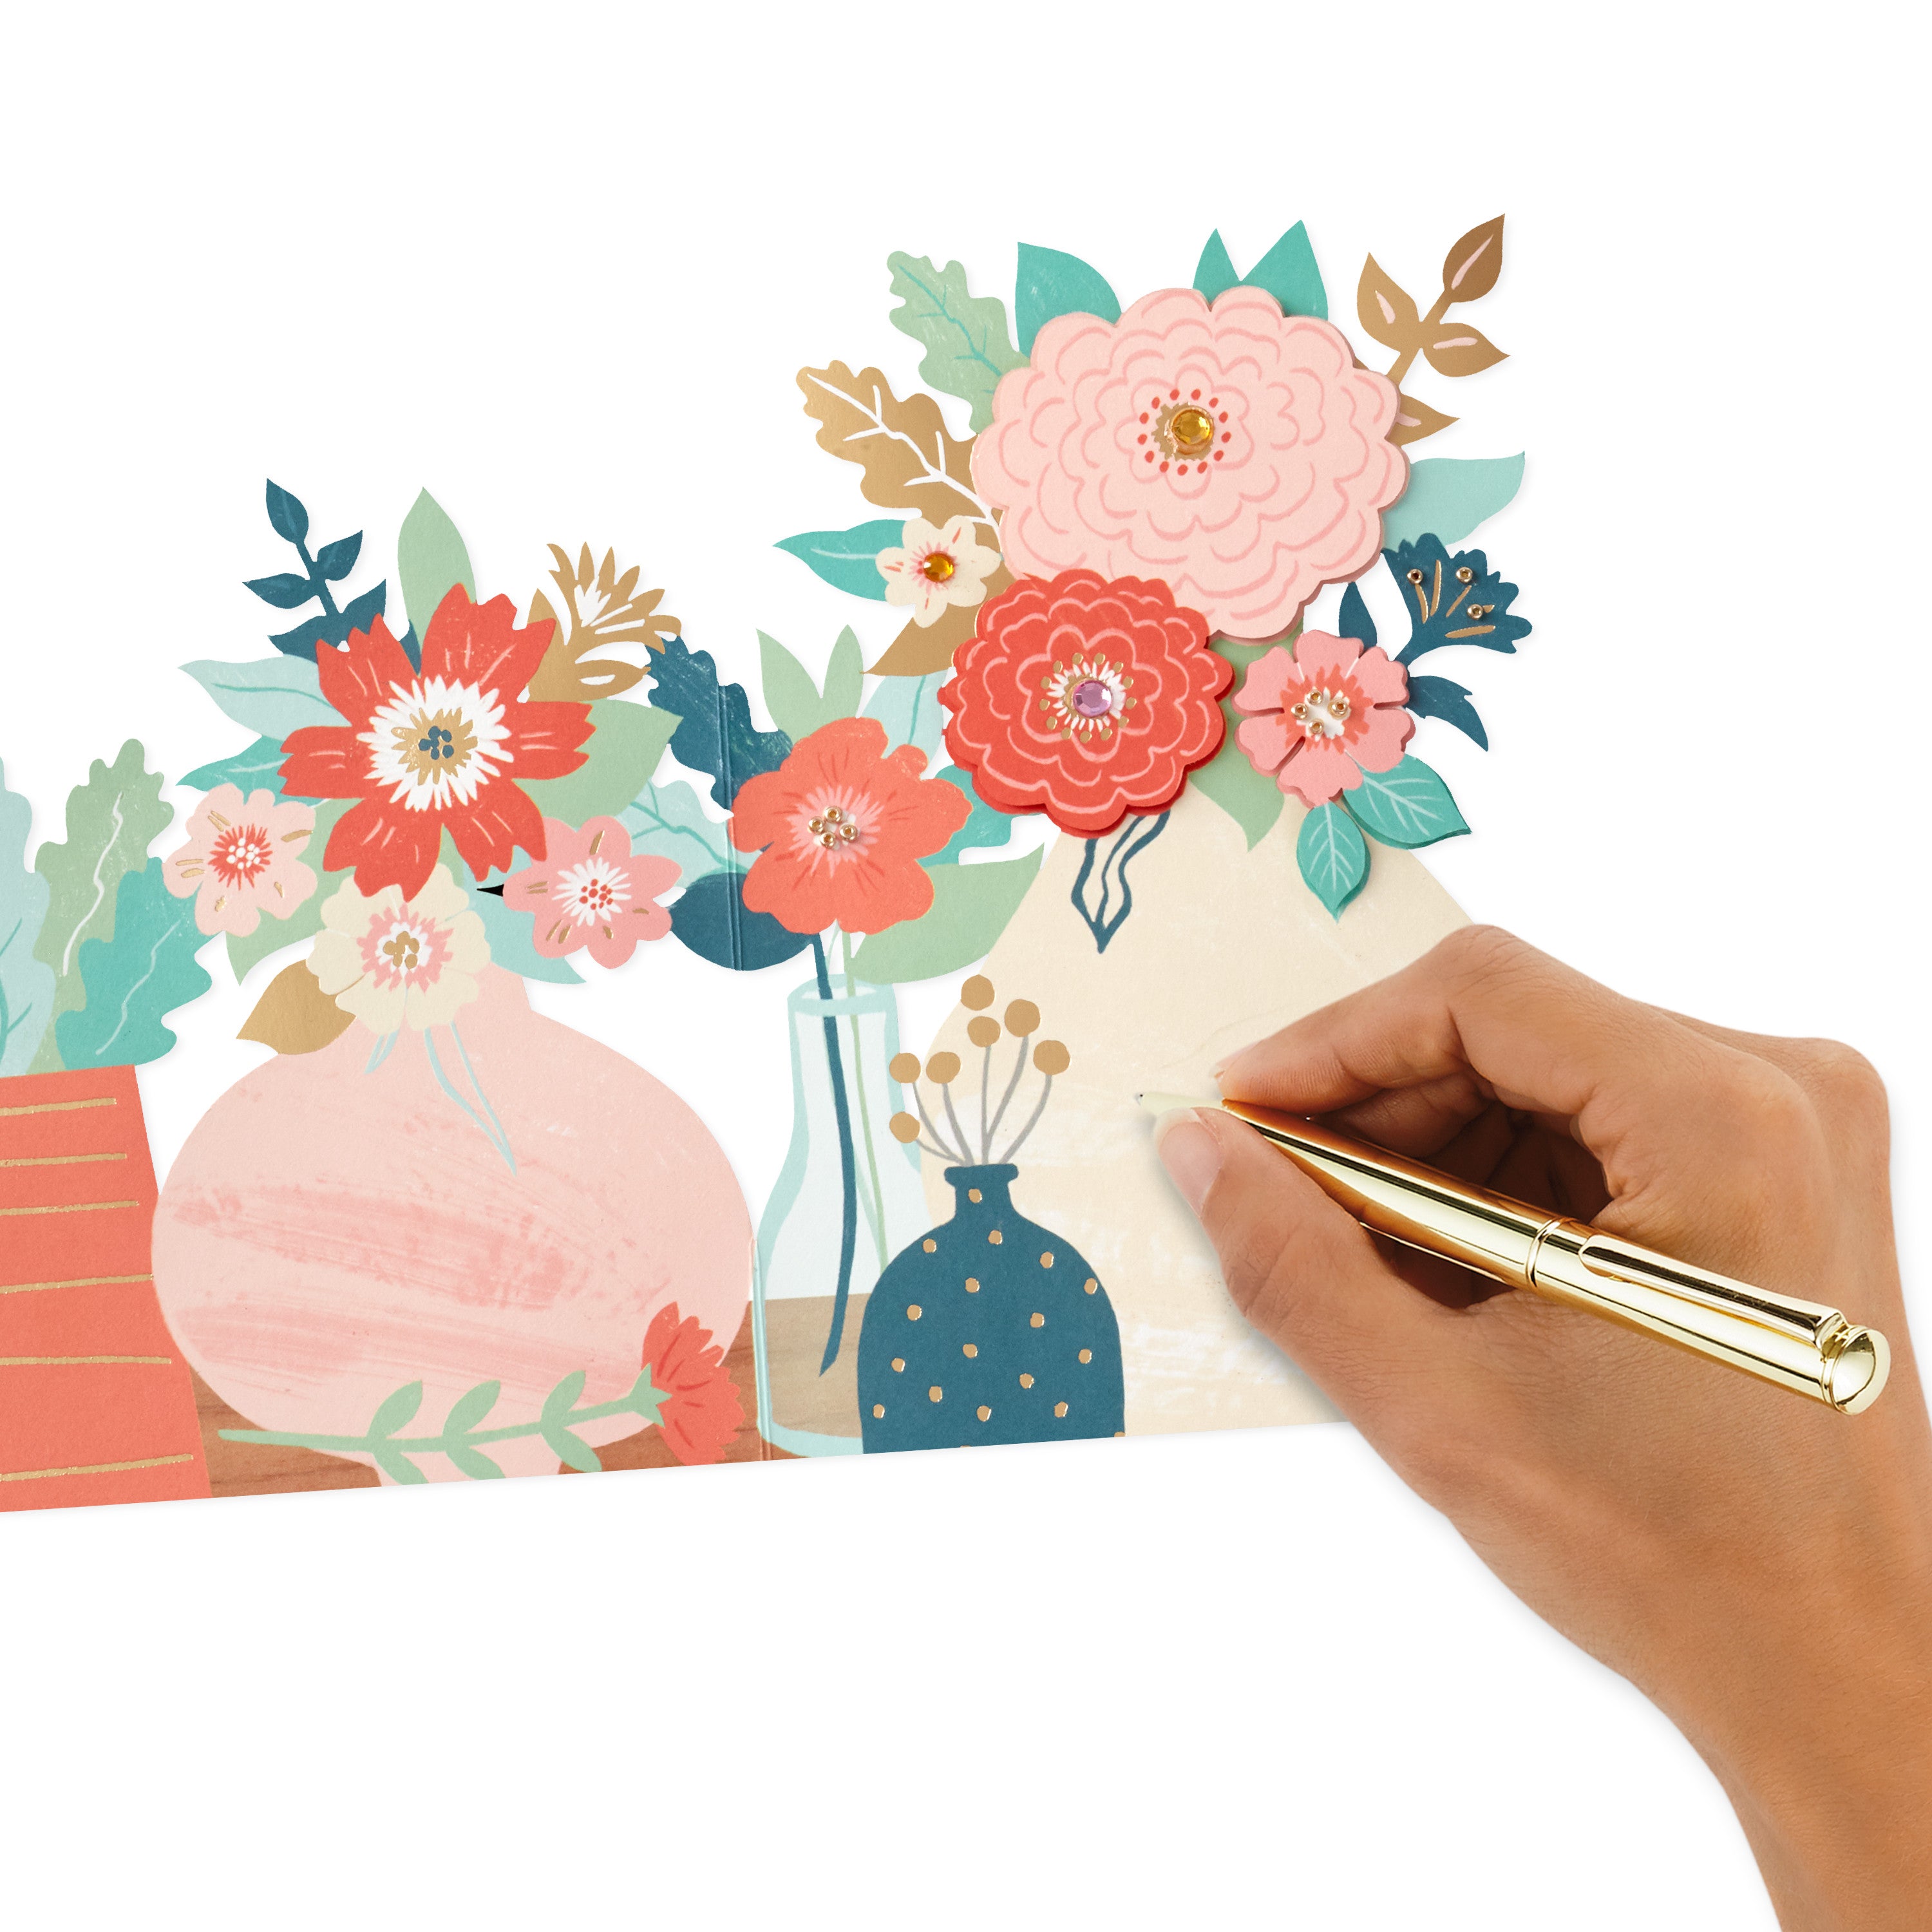 Hallmark Signature Blank Card for Women (Displayable Accordion Fold Flowers)